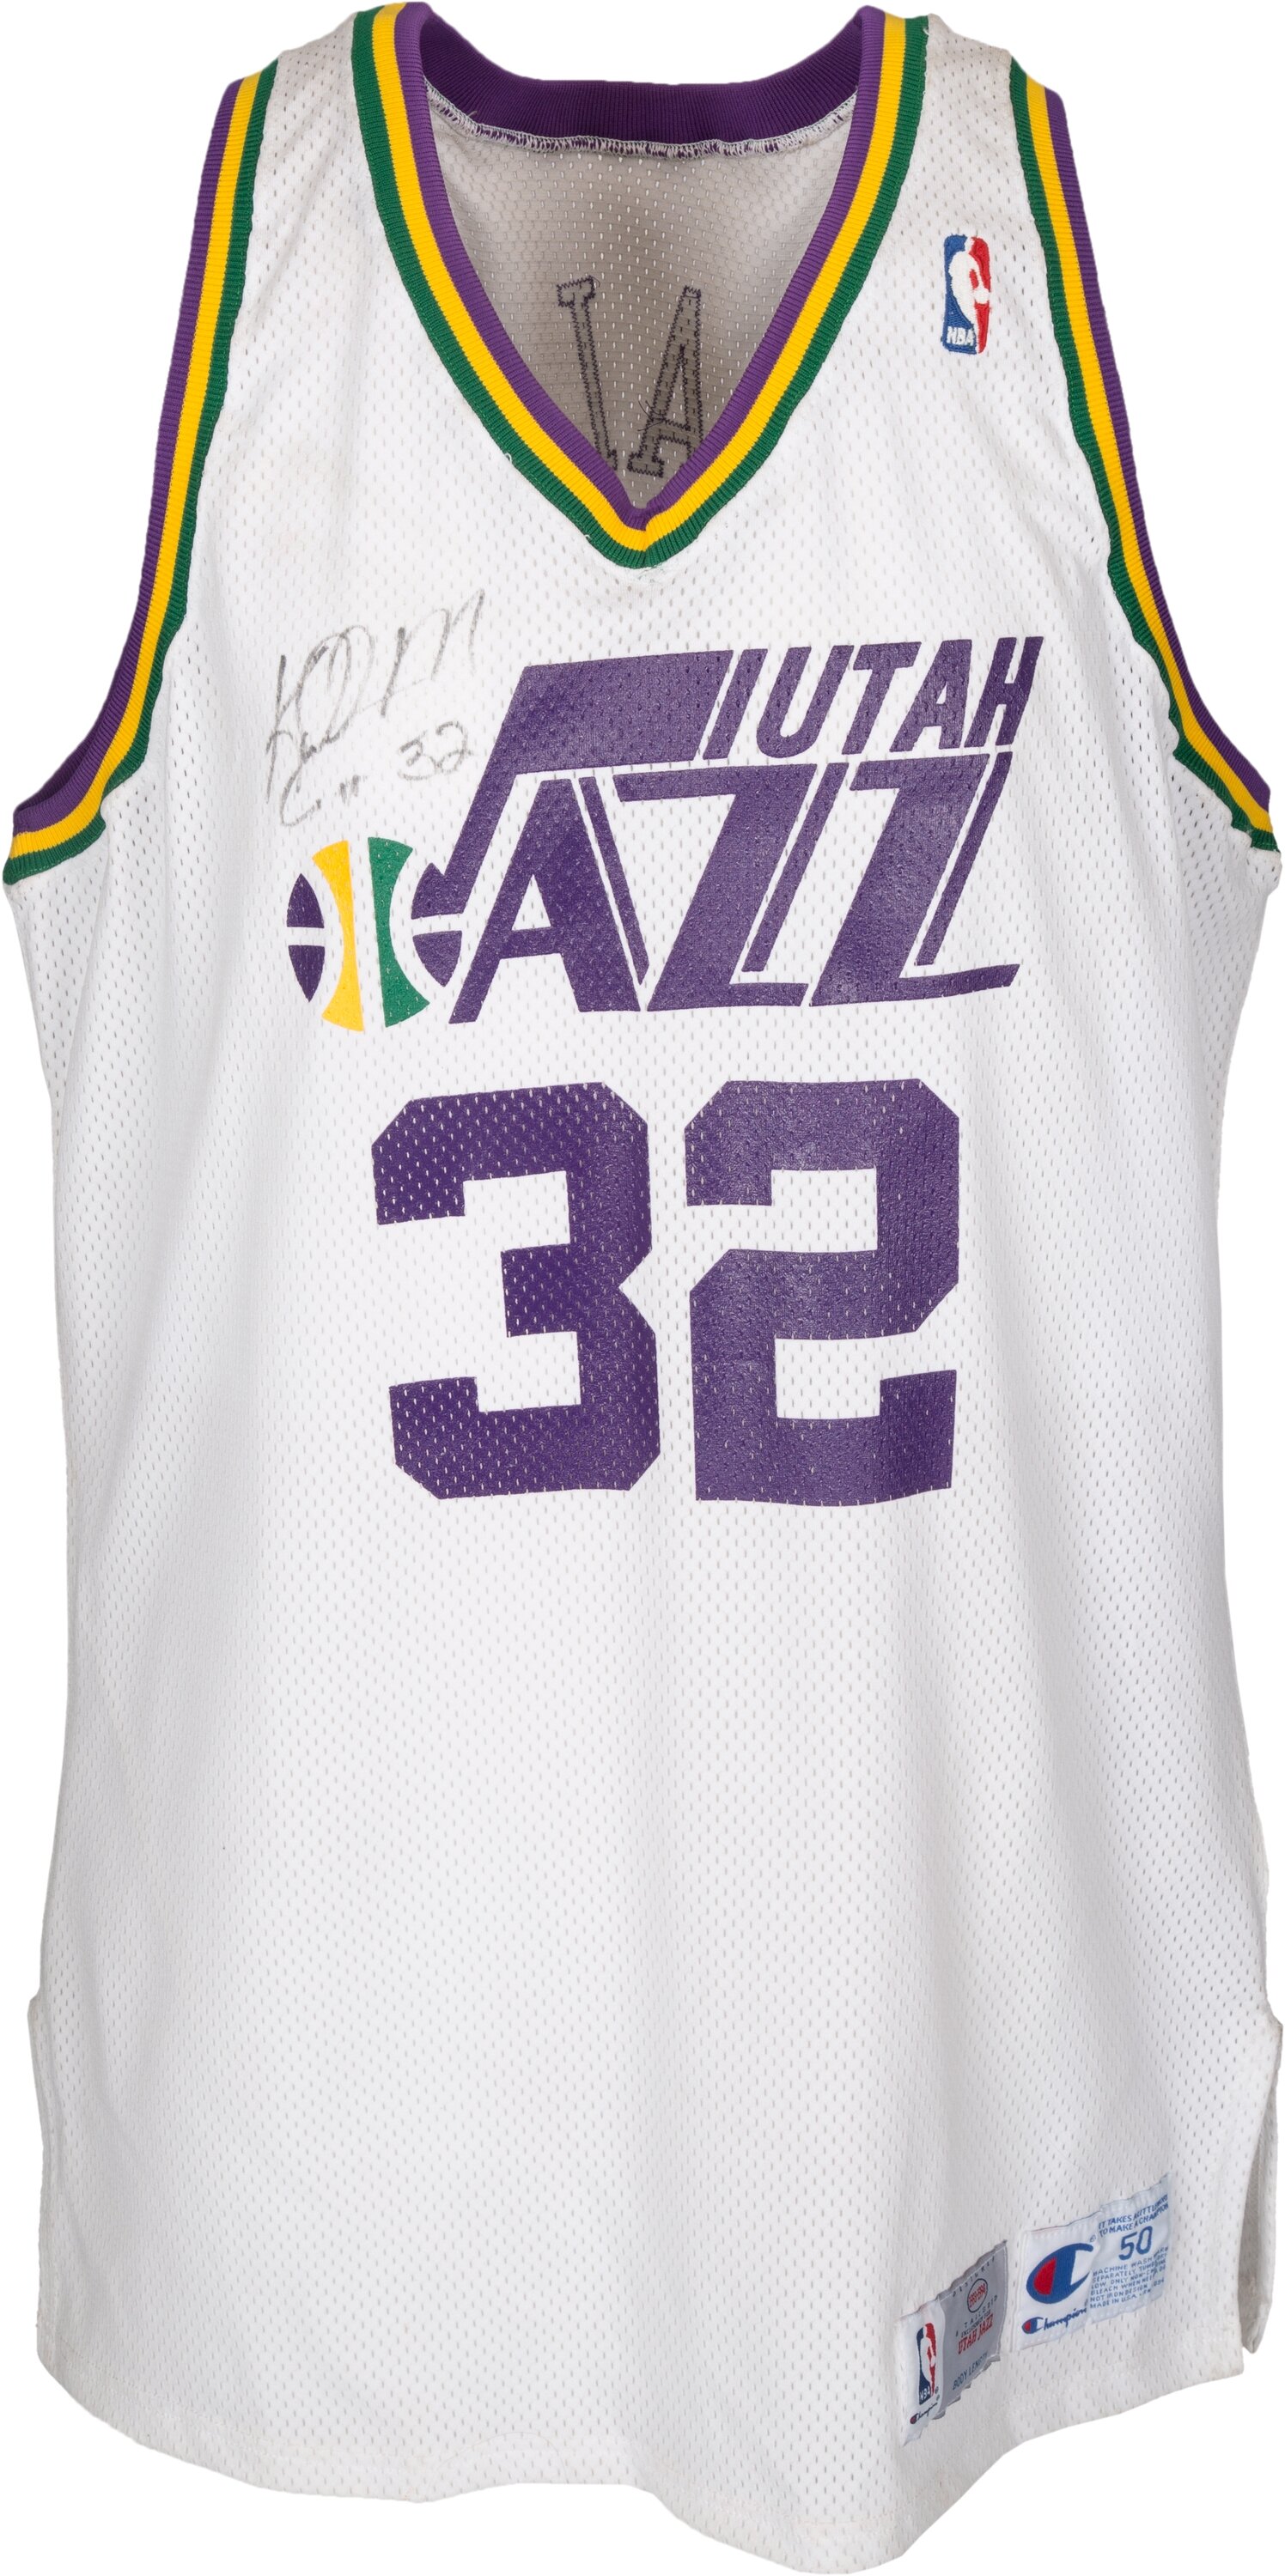 Utah Jazz Jerseys & Teamwear, NBA Merchandise